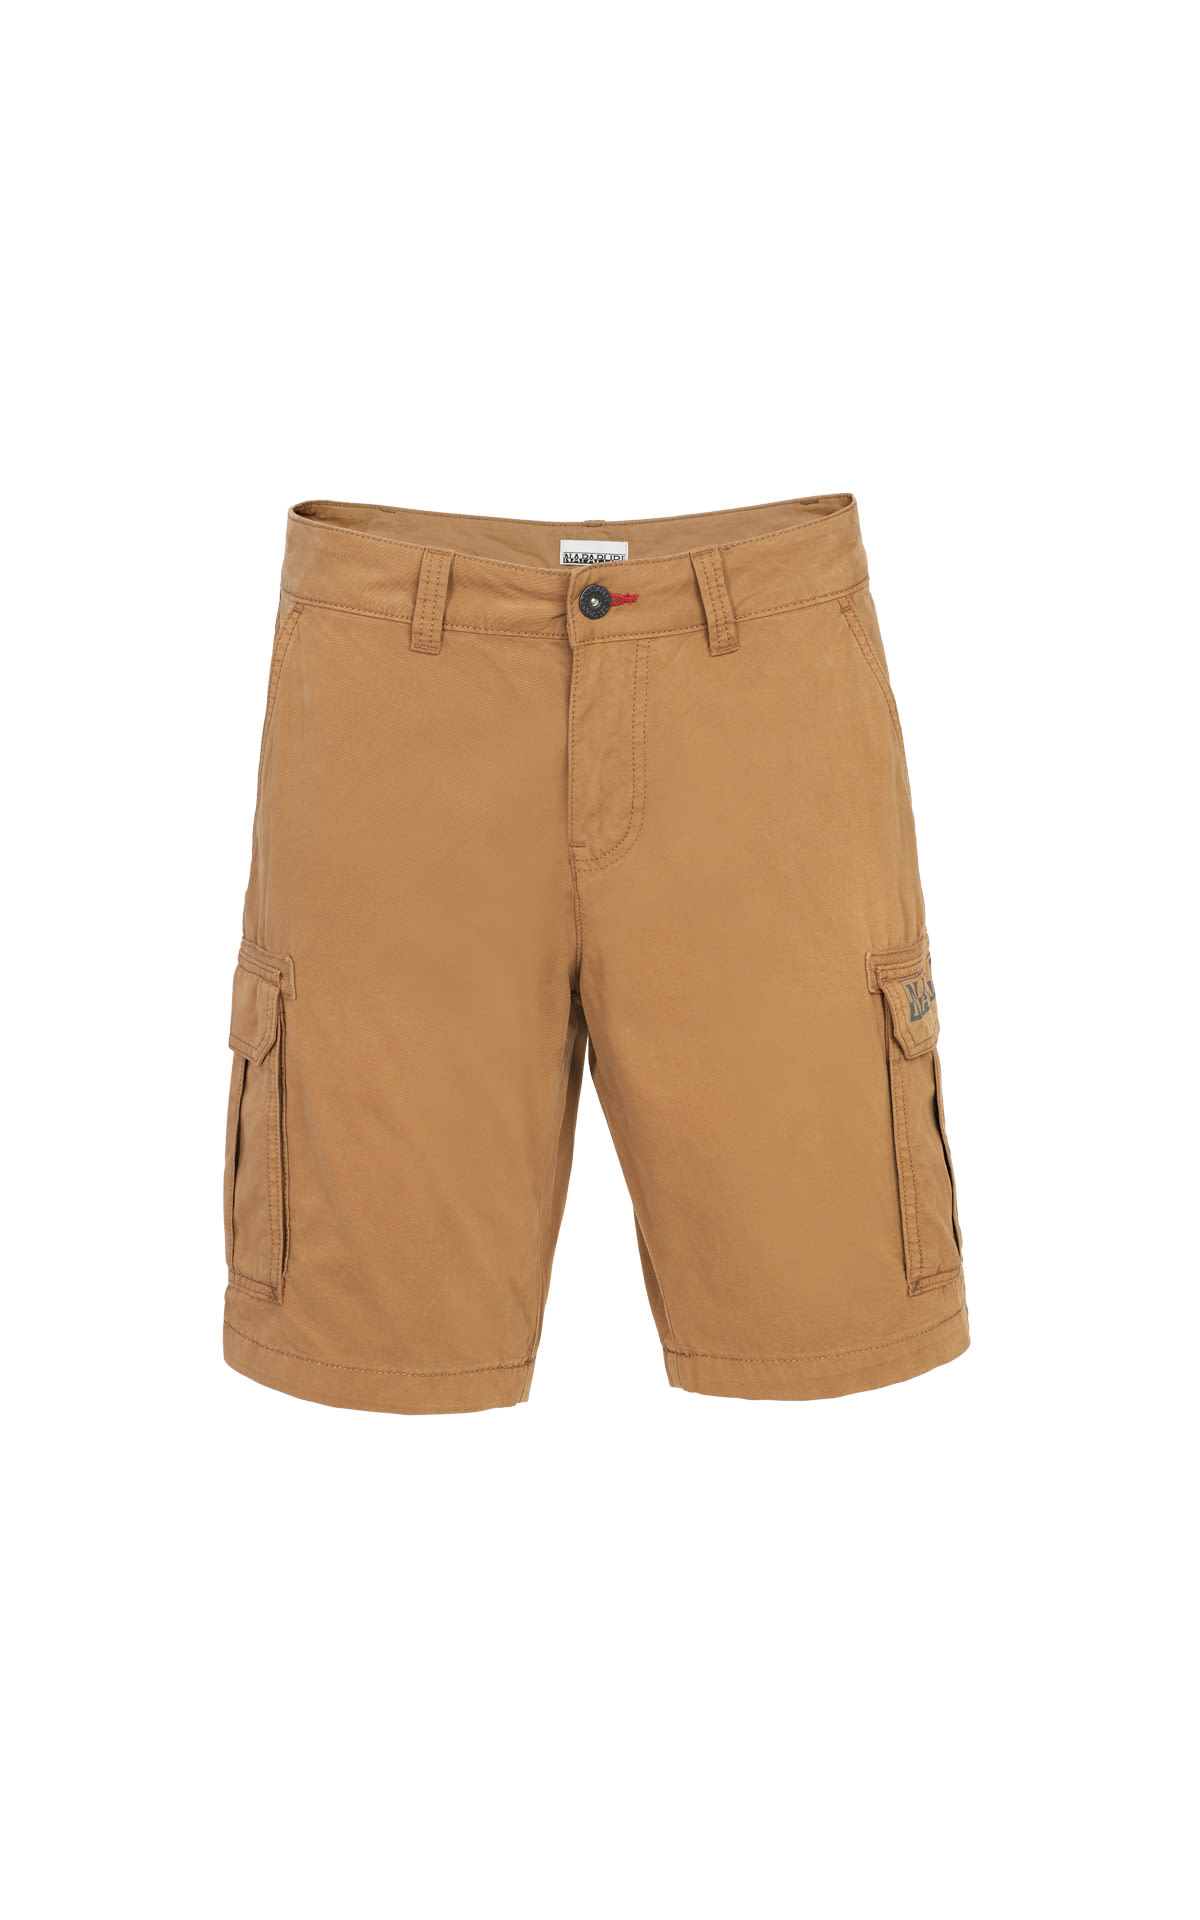 Pantalones cortos camel Napapijri